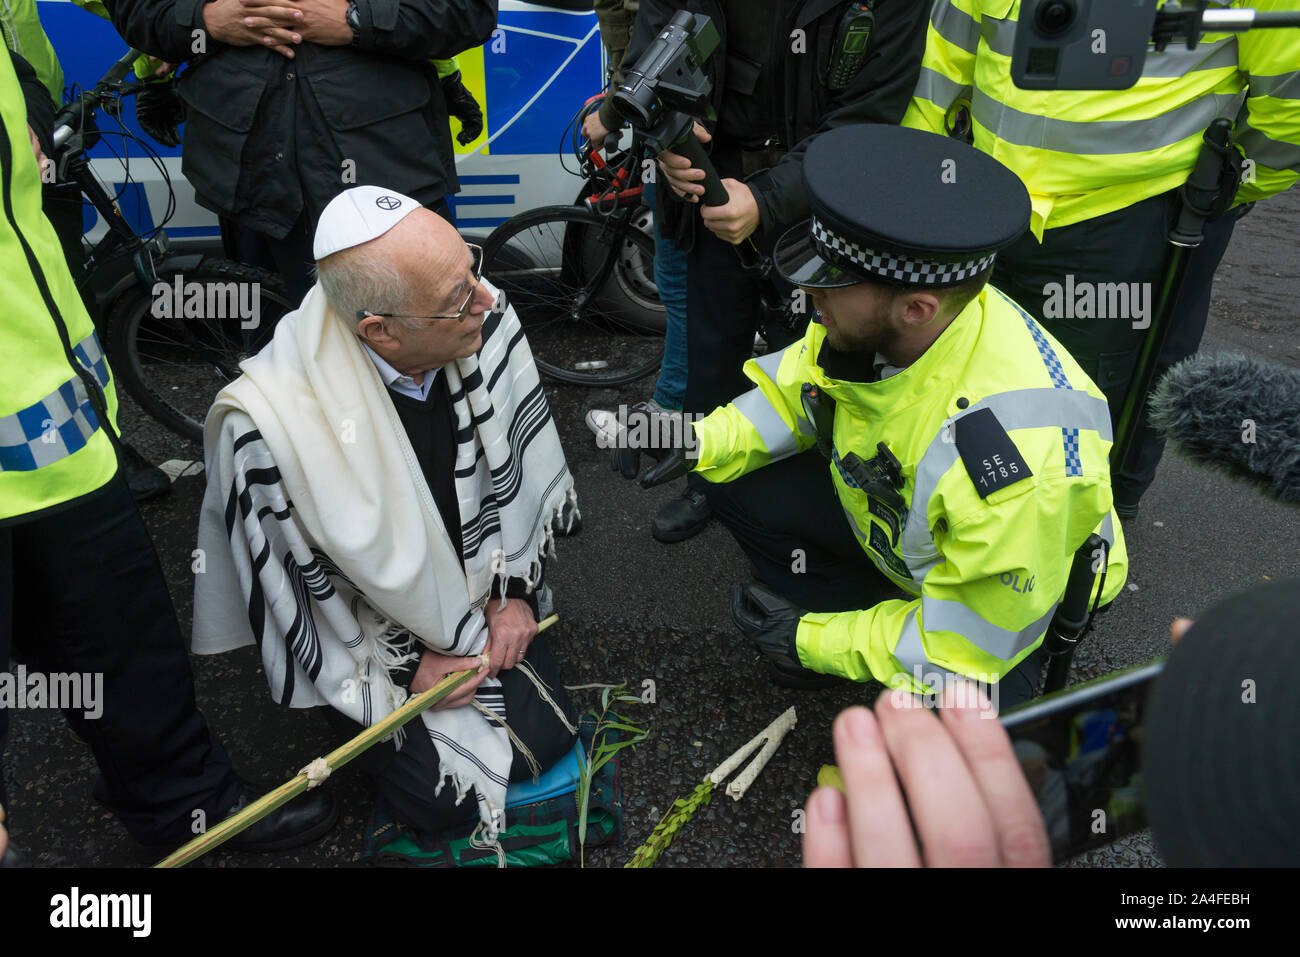 Rabbi am Aussterben Rebellion, London festgenommen Stockfoto